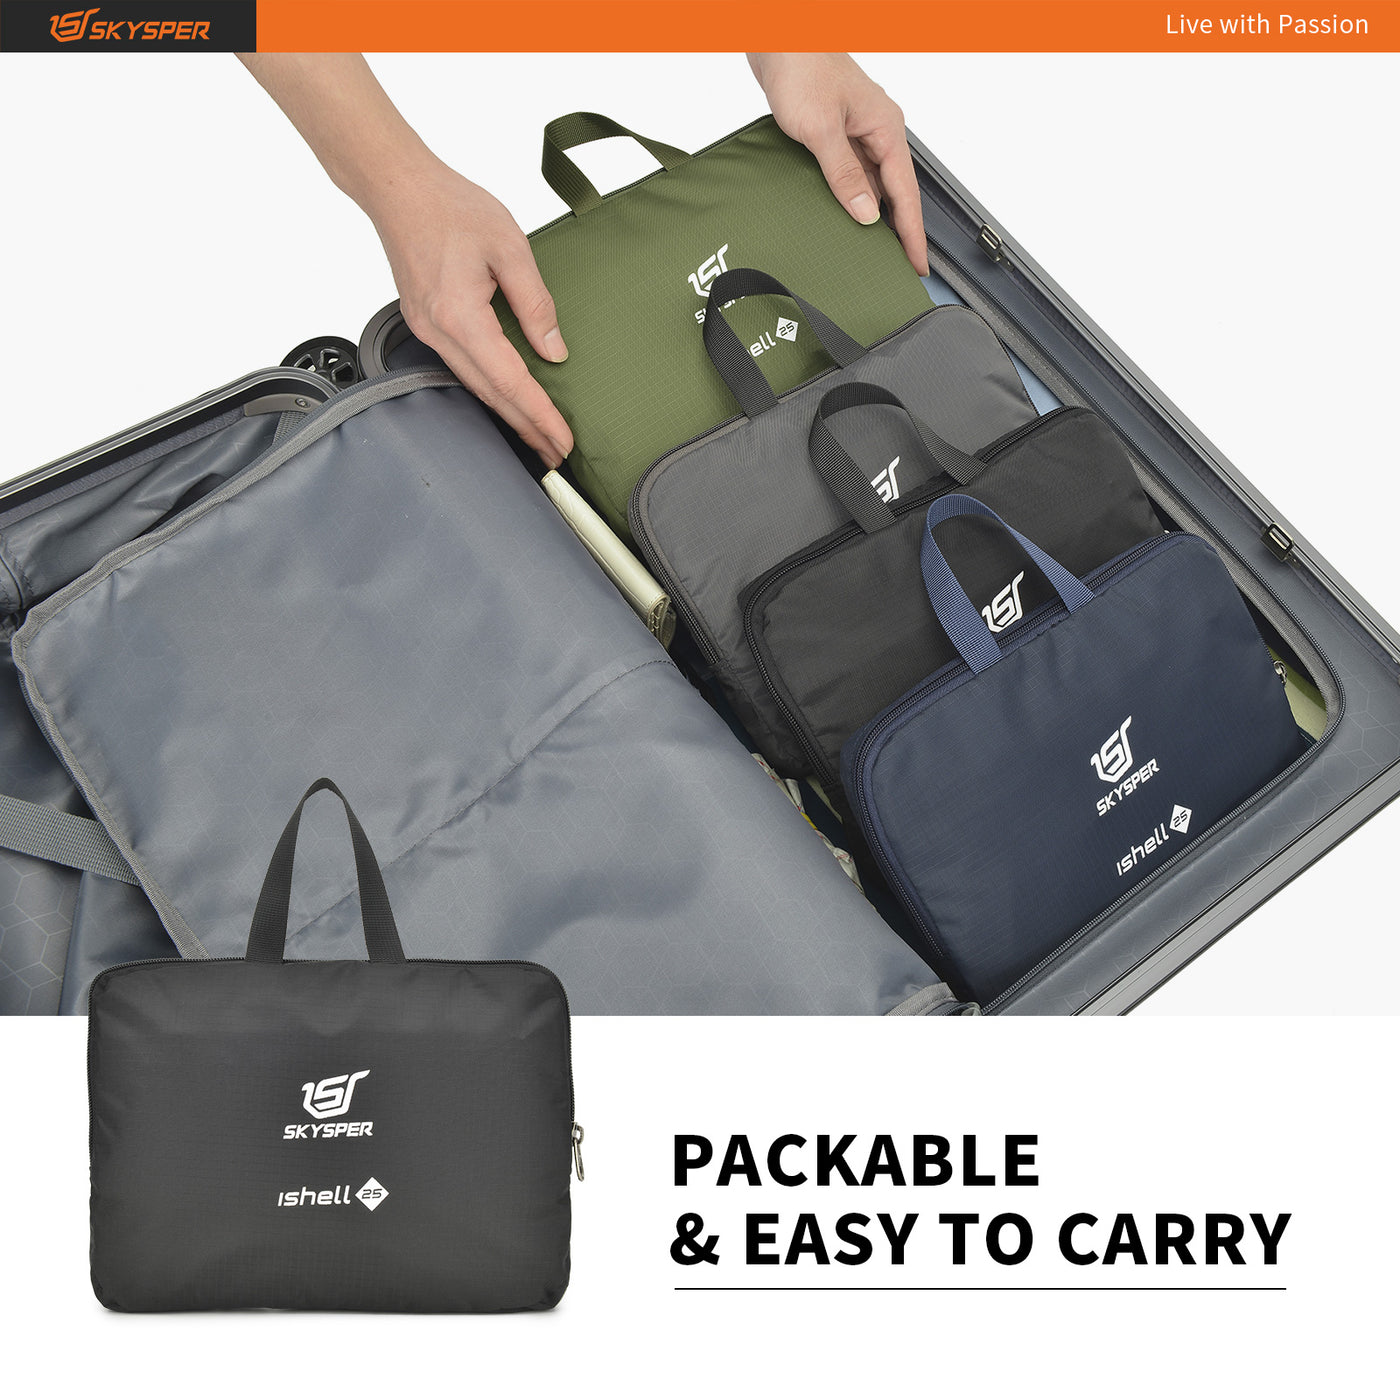 SKYSPER ISHELL25 - Lightweight Packable Backpack 25L